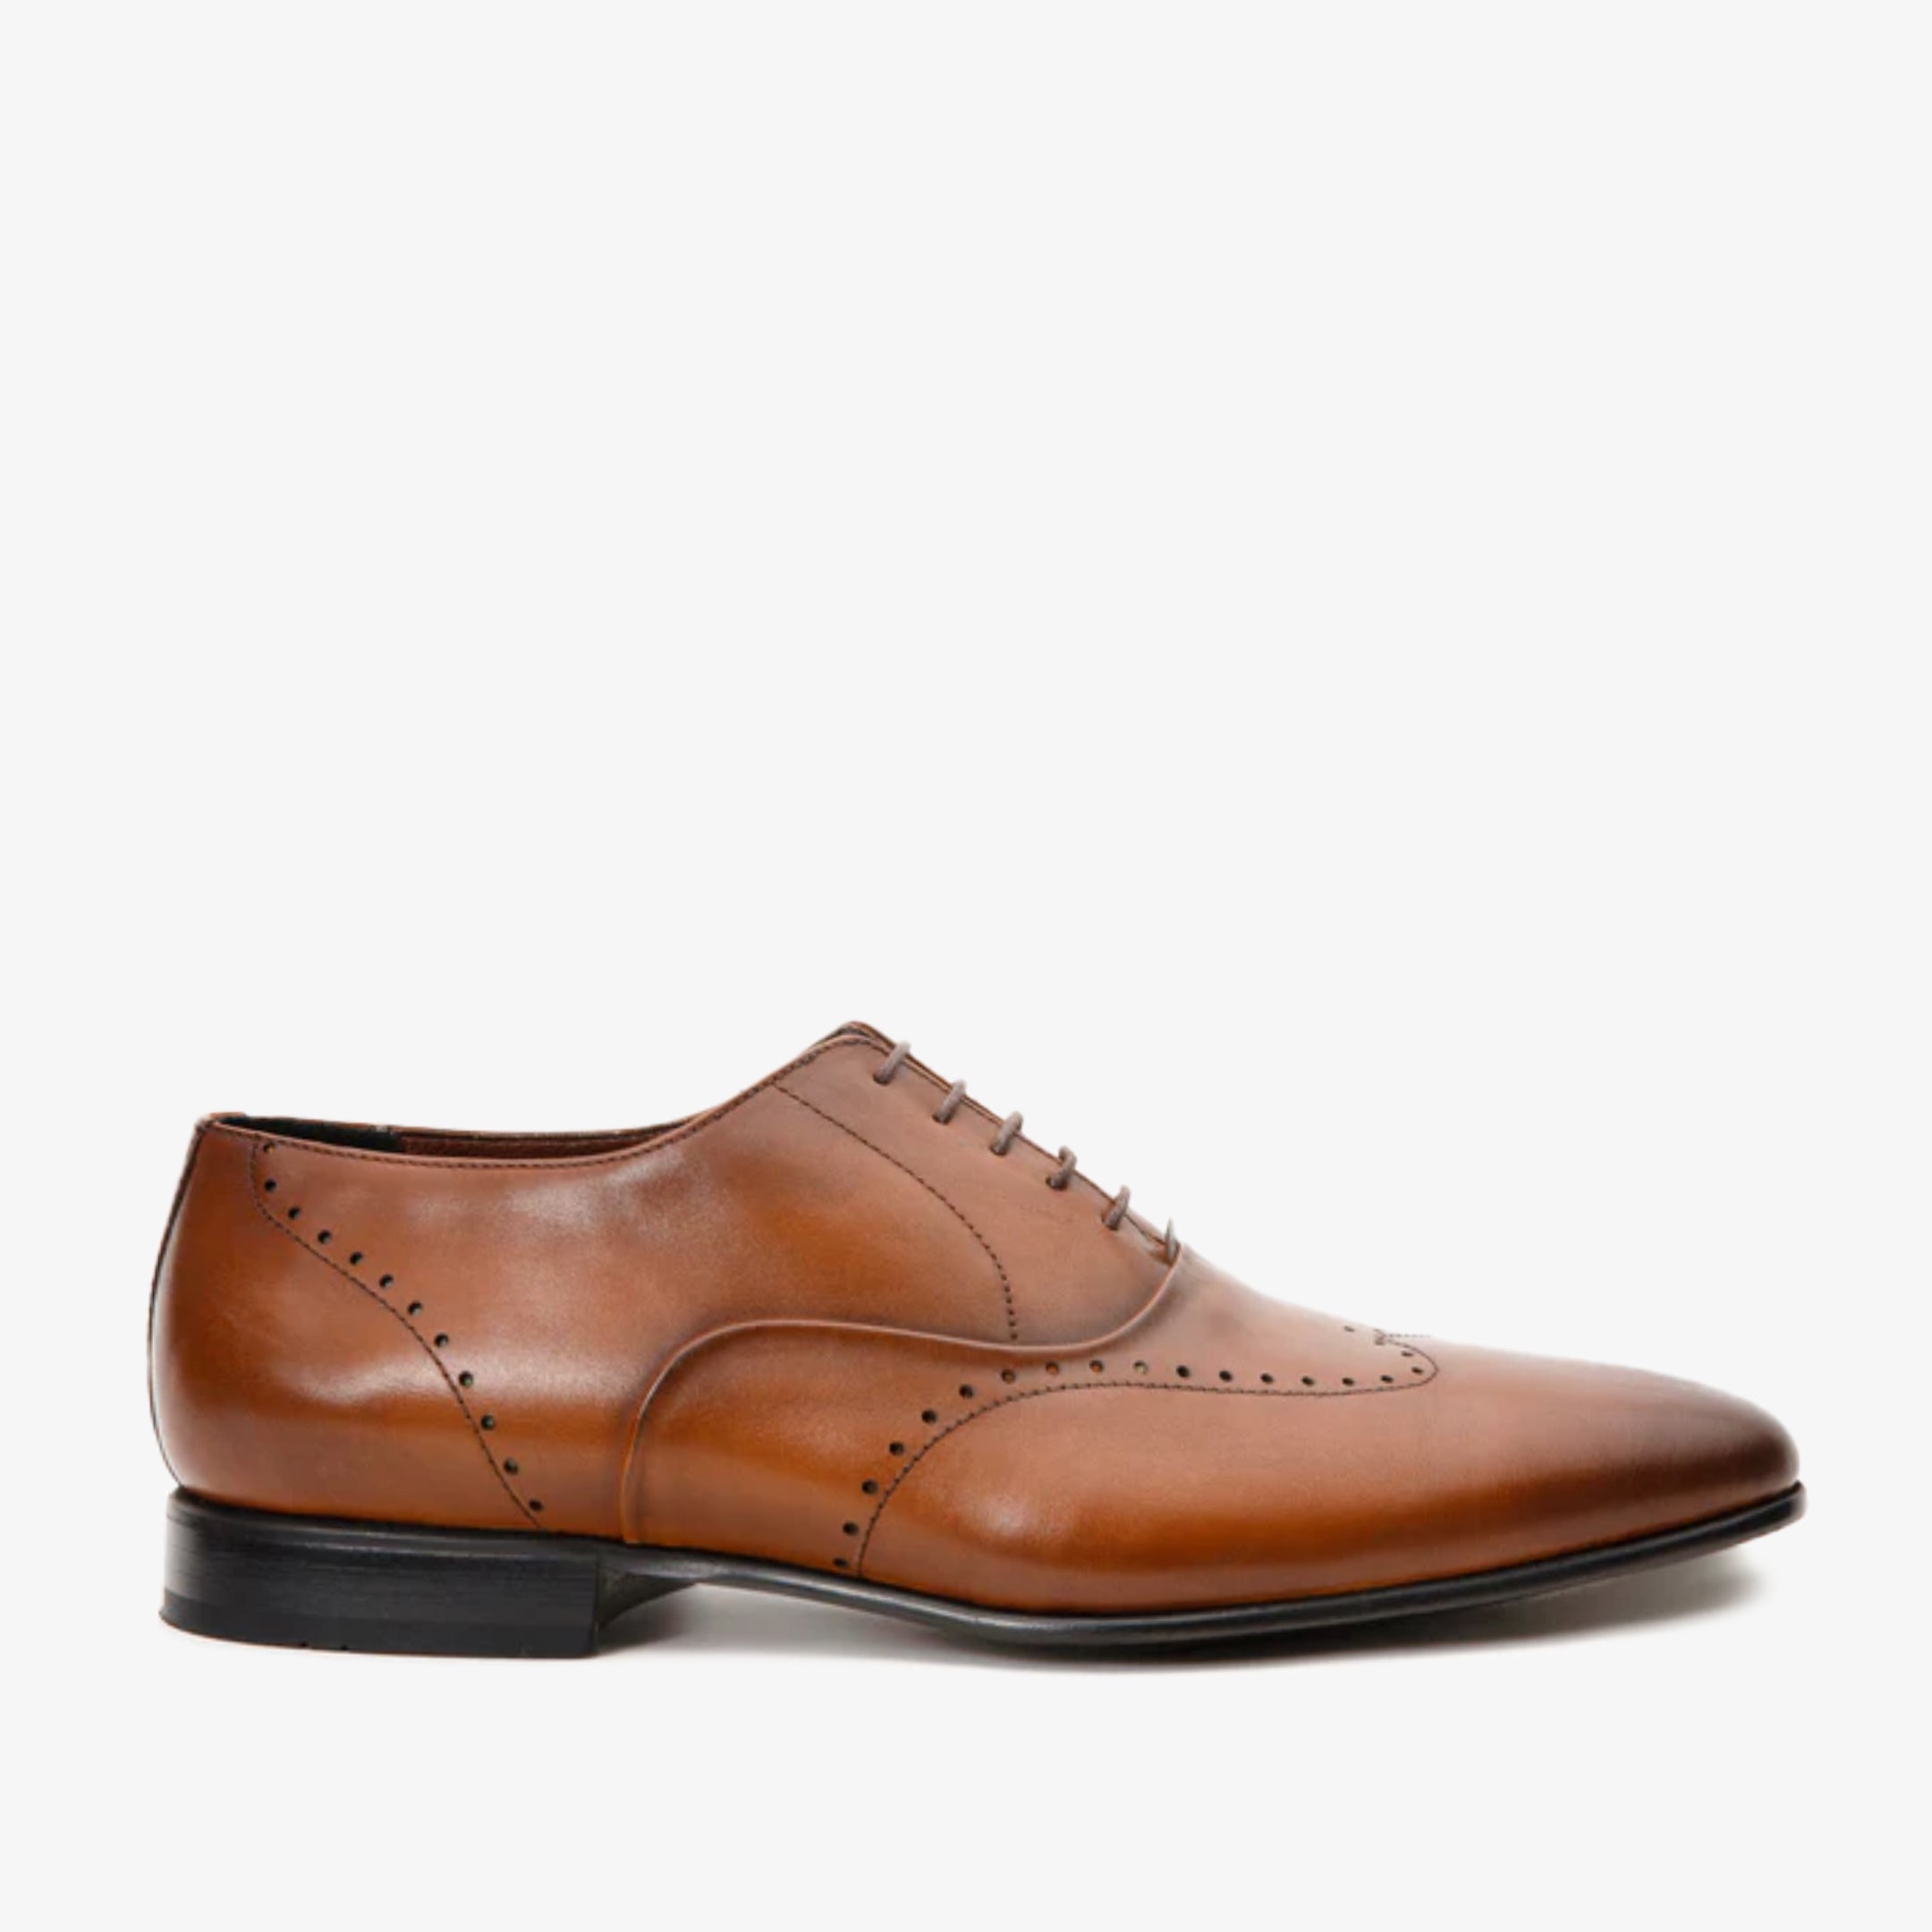 The Roma Tan Leather Wingtip Oxford Men Shoe